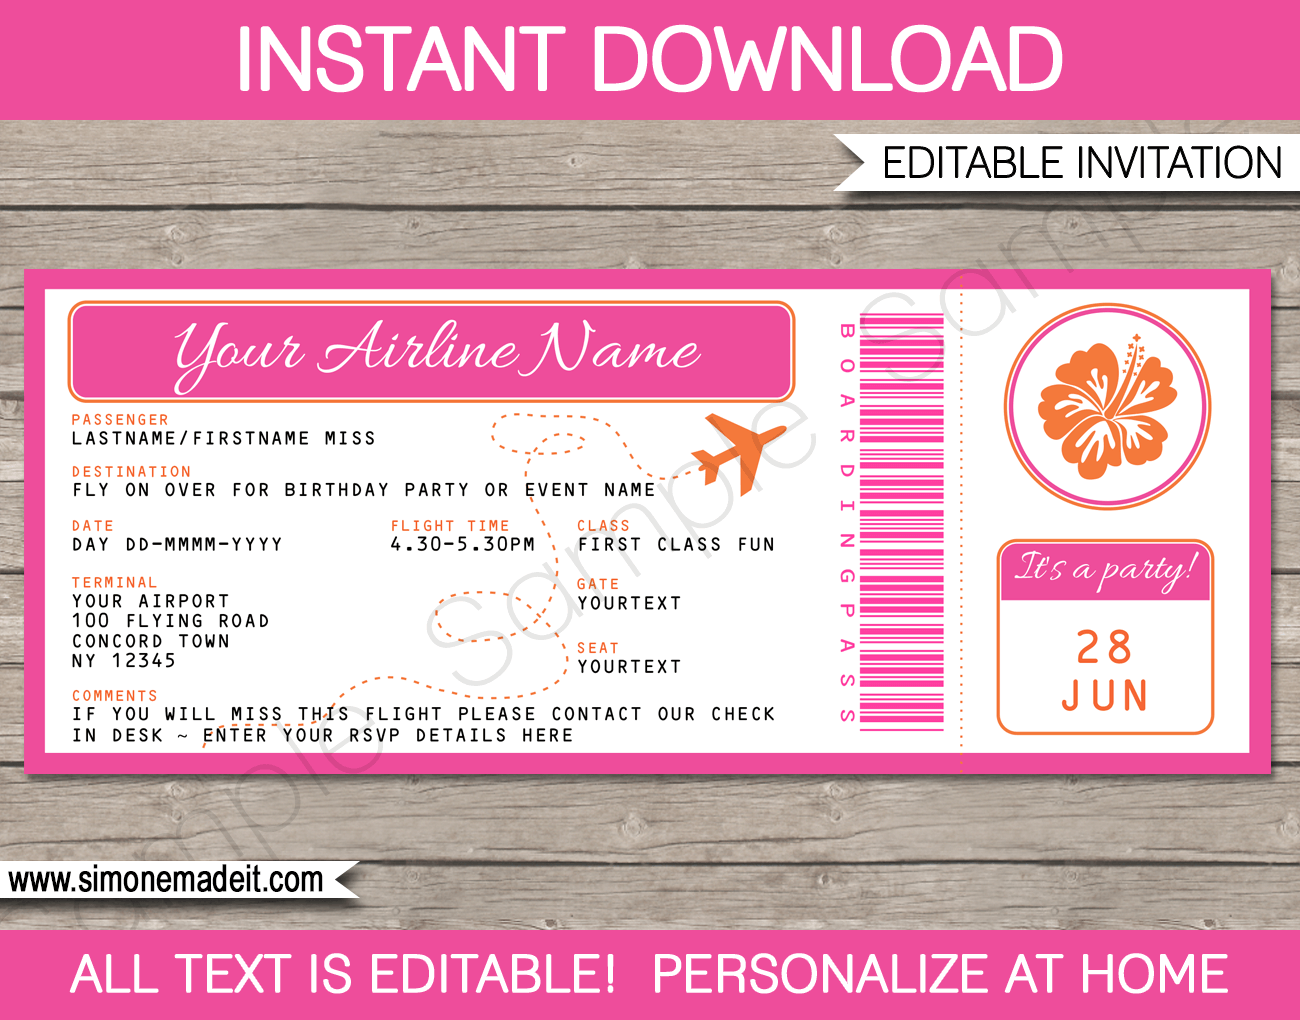 Luau Boarding Pass Invitations | Birthday Party | Hawaiian Luau | Airplane Ticket | Editable DIY Theme Template | INSTANT DOWNLOAD $7.50 via SIMONEmadeit.com